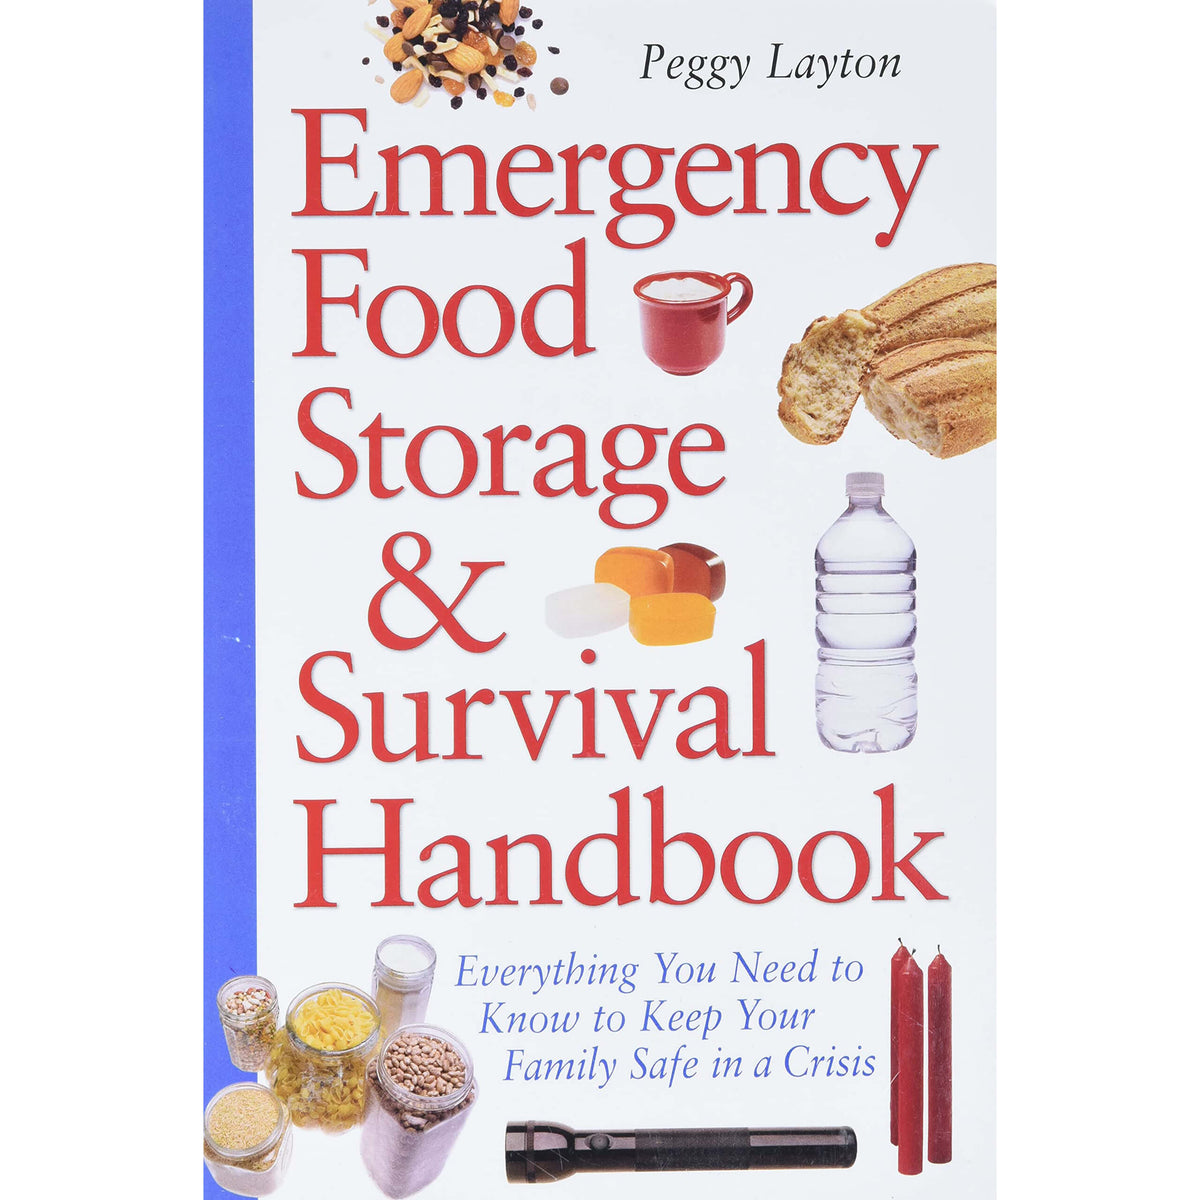 Emergency Food Storage &amp; Survival Handbook front cover.